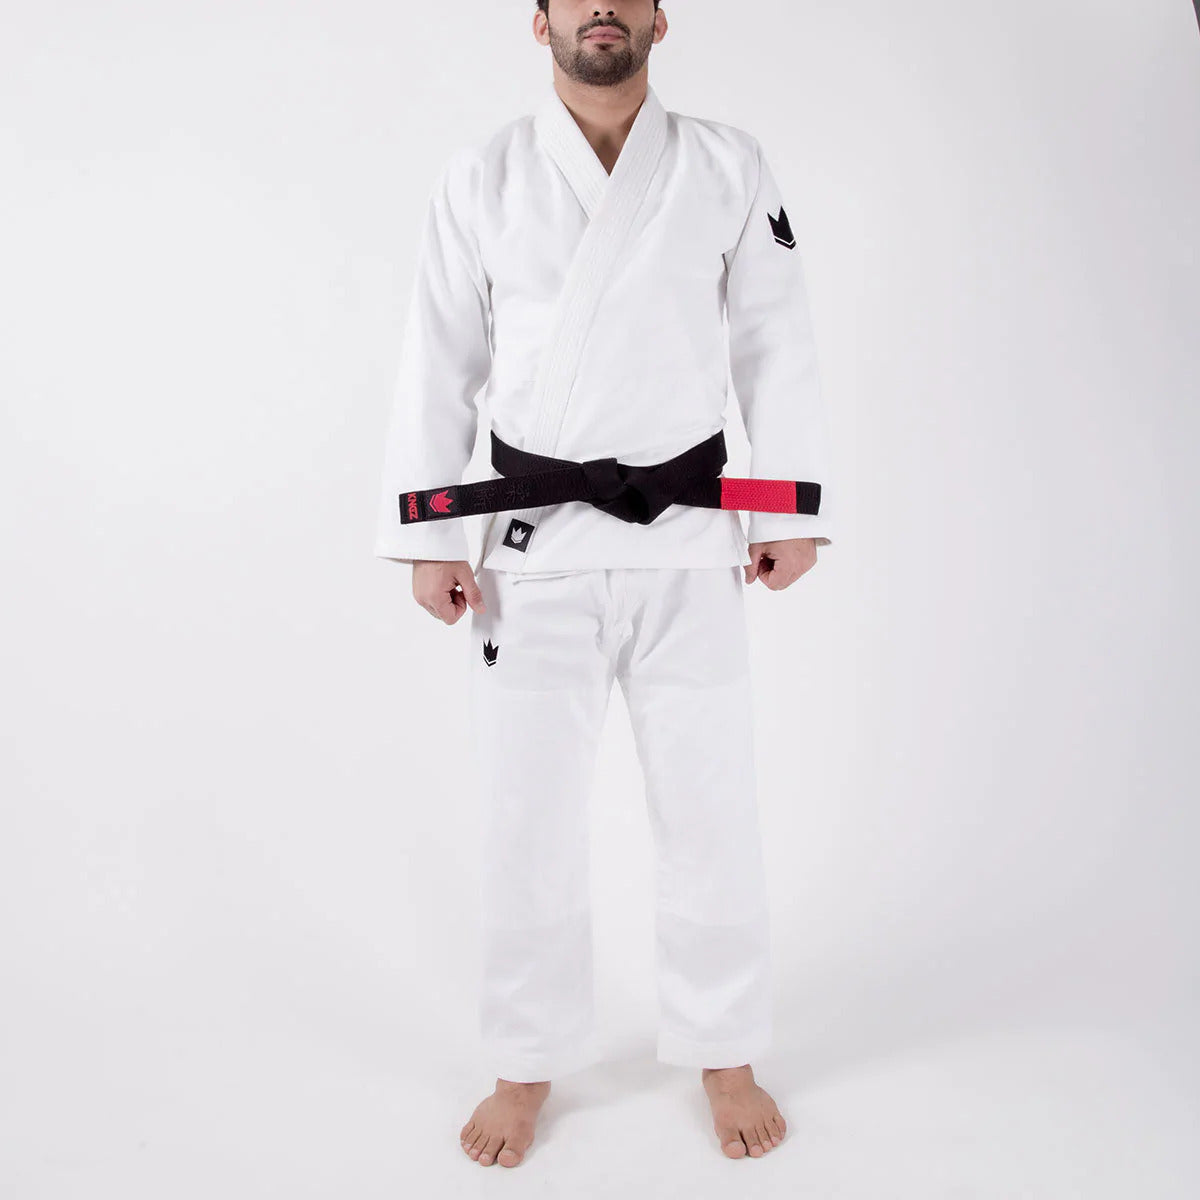 Kore - With free white belt